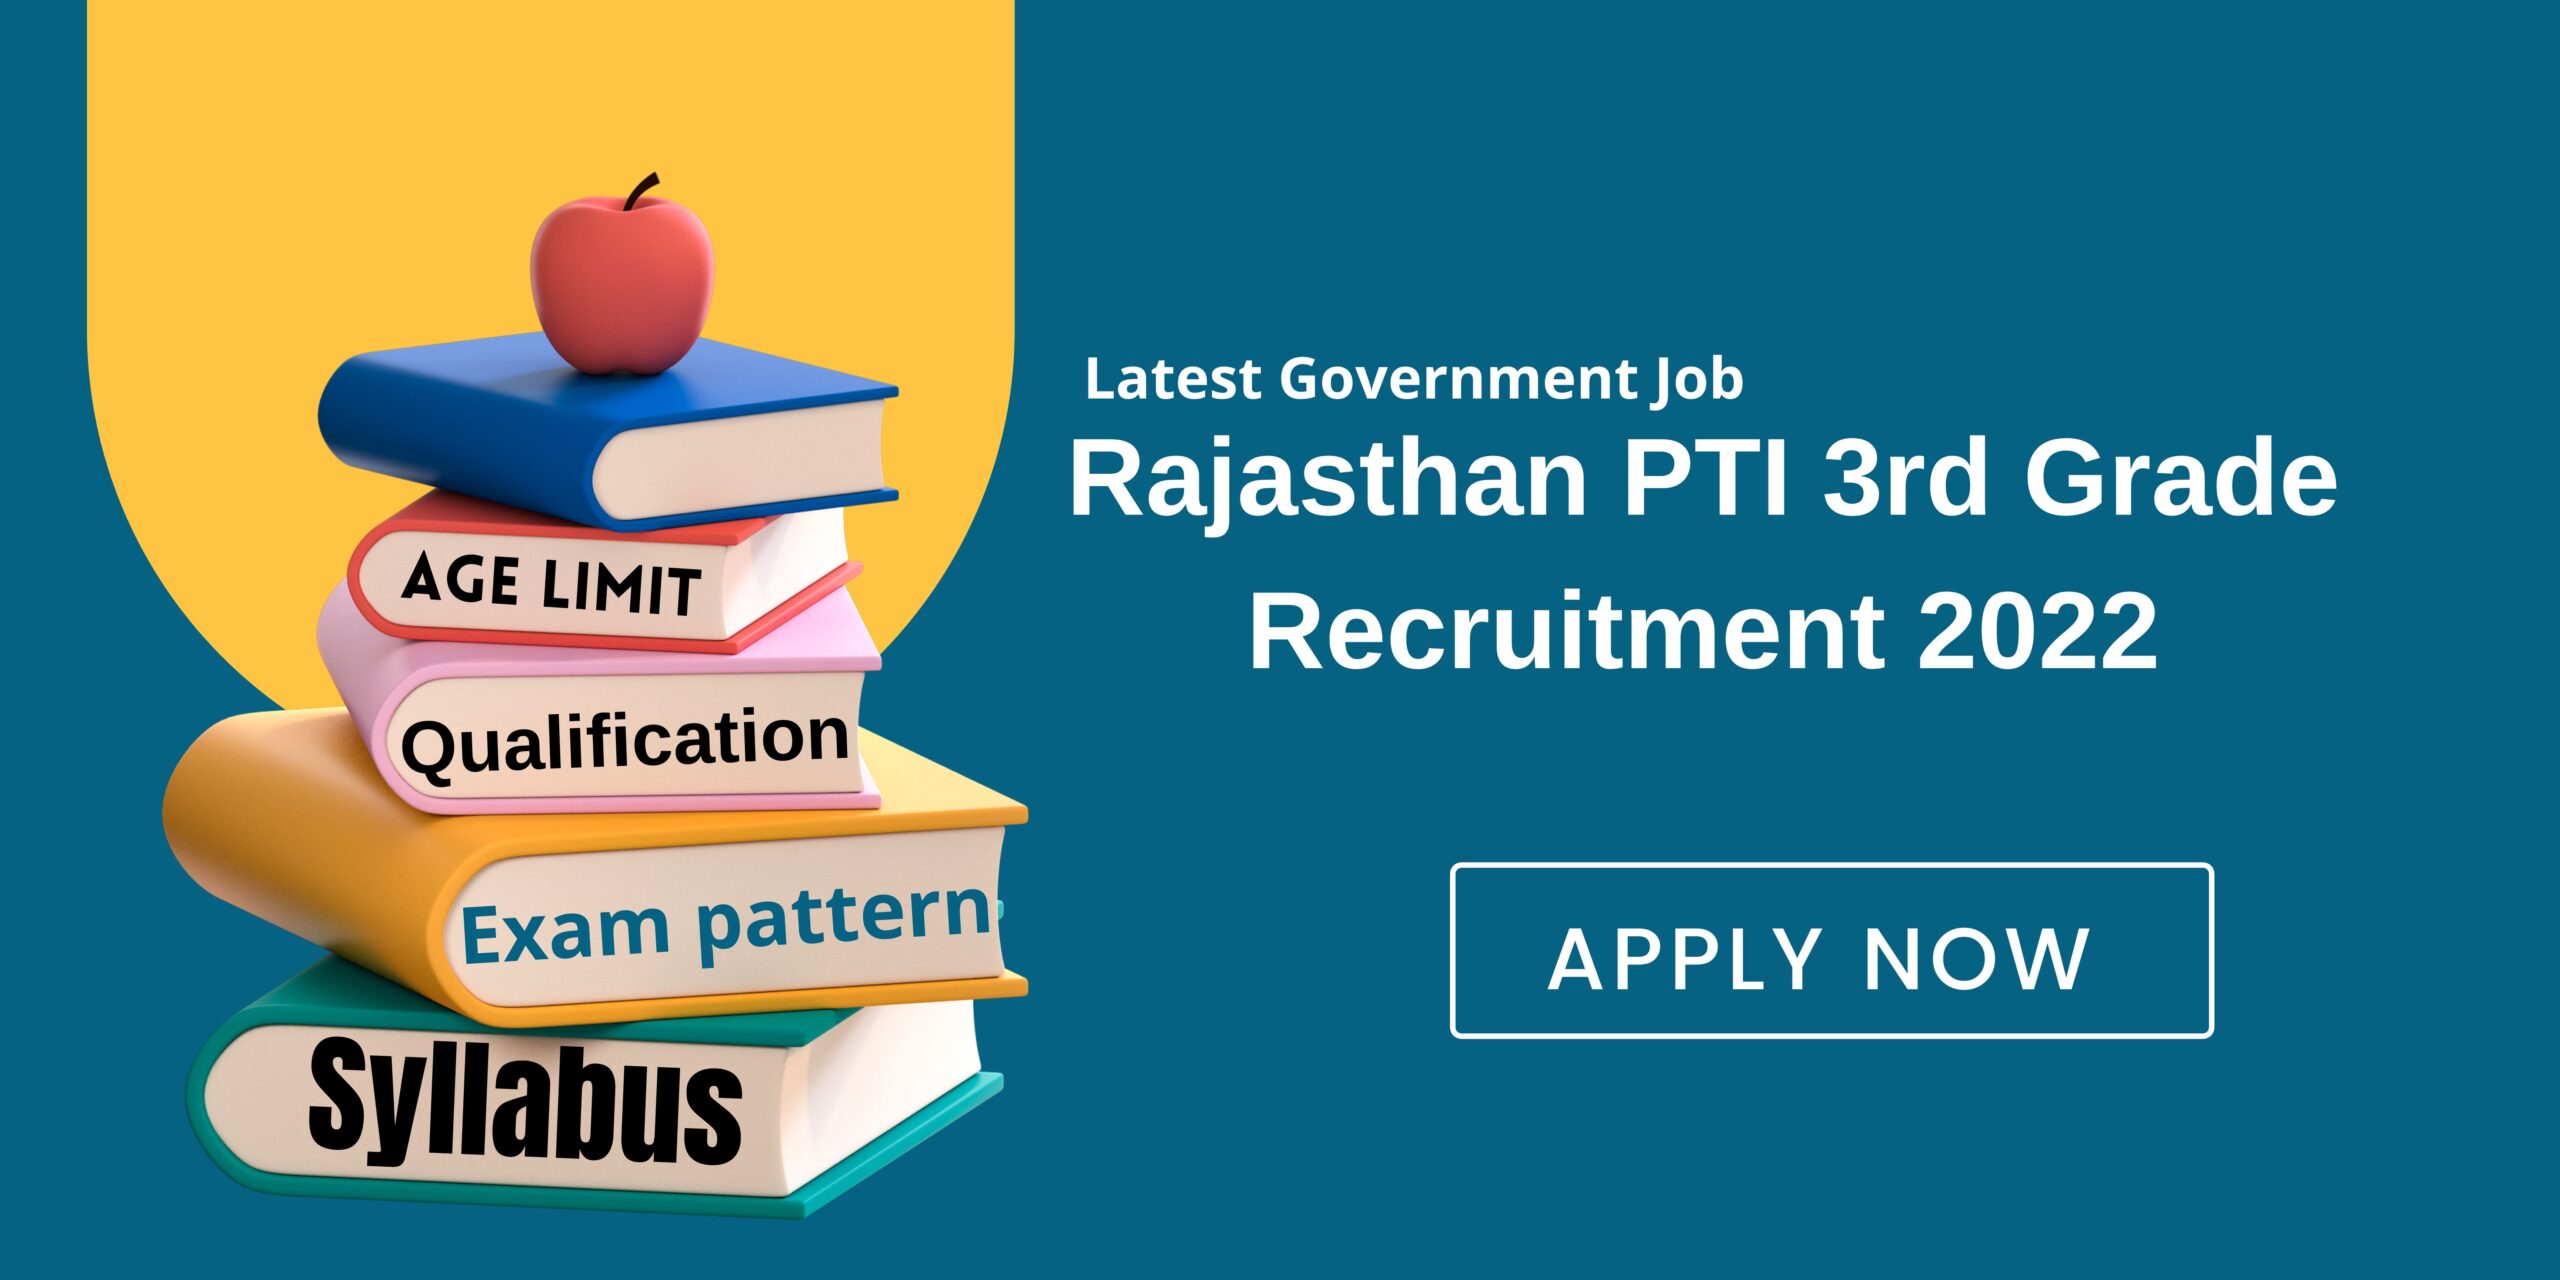 Rajasthan PTI 3rd Grade Recruitment 2022